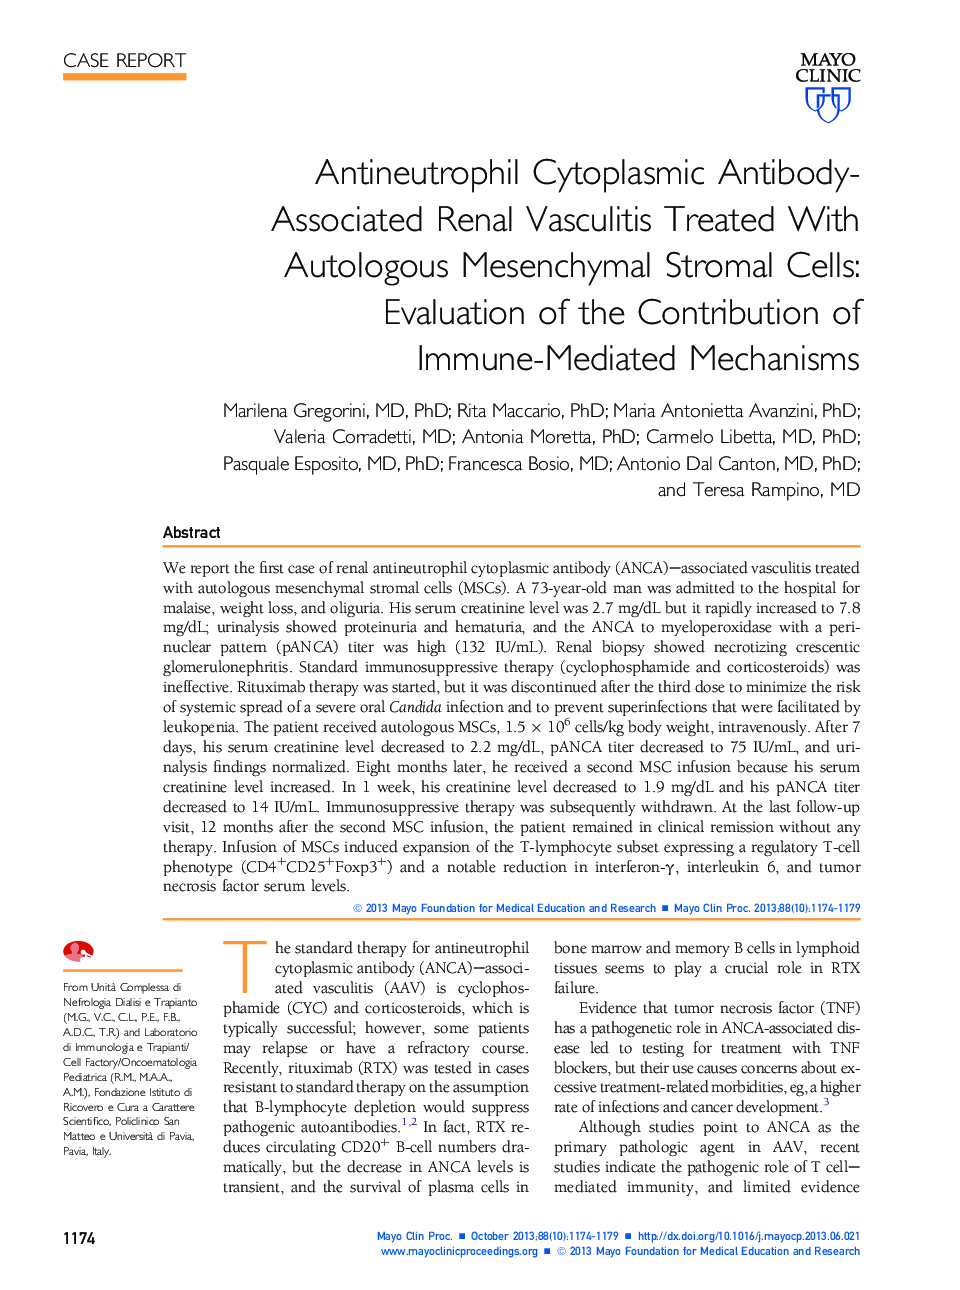 Antineutrophil Cytoplasmic Antibody-Associated Renal Vasculitis Treated With Autologous Mesenchymal Stromal Cells: Evaluation of the Contribution of Immune-Mediated Mechanisms